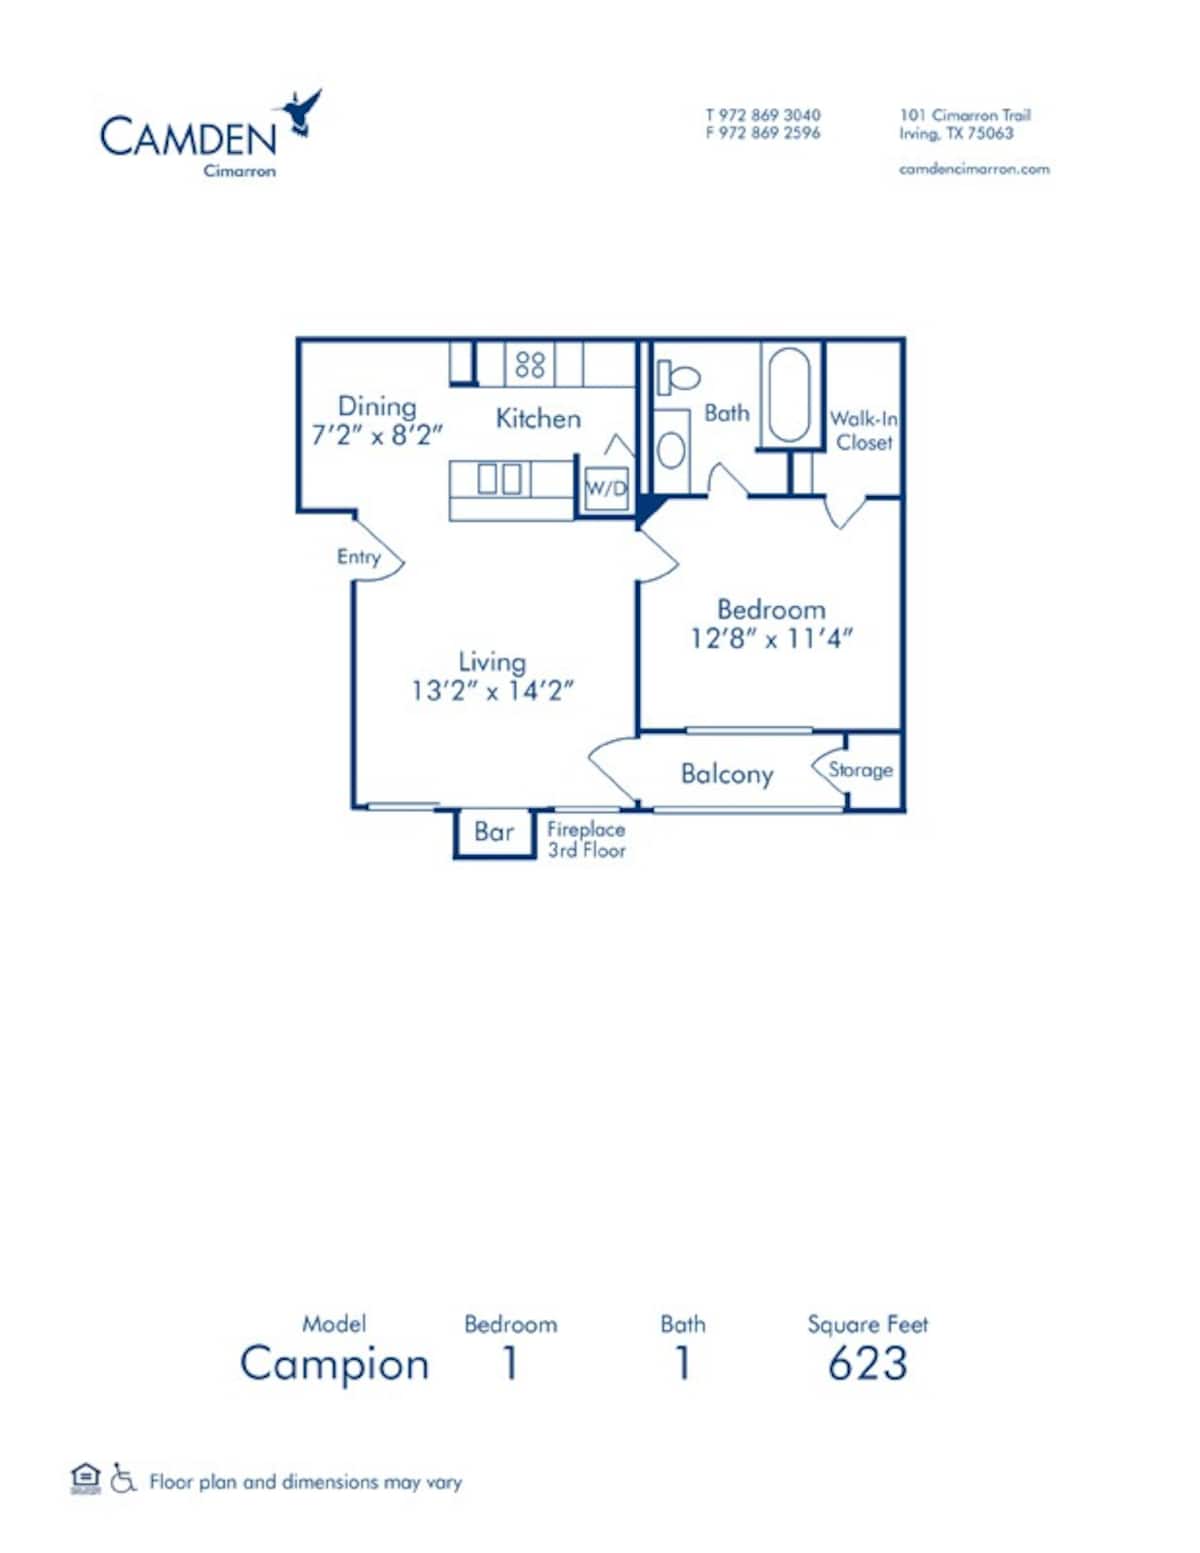 Floorplan diagram for Campion, showing 1 bedroom